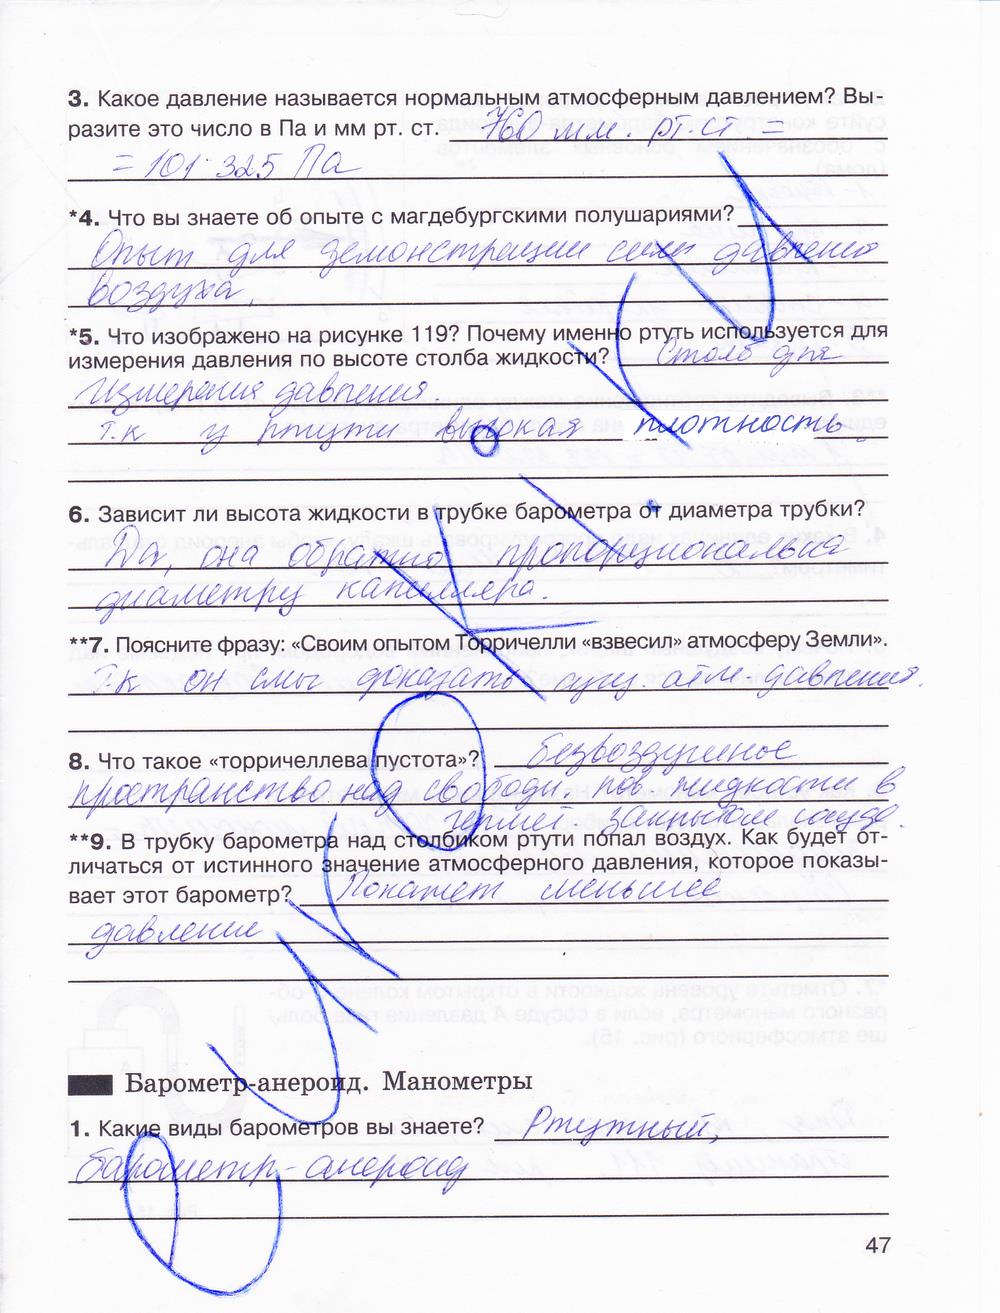 гдз 7 класс рабочая тетрадь страница 47 физика Мартынова, Бовин, Коротаев